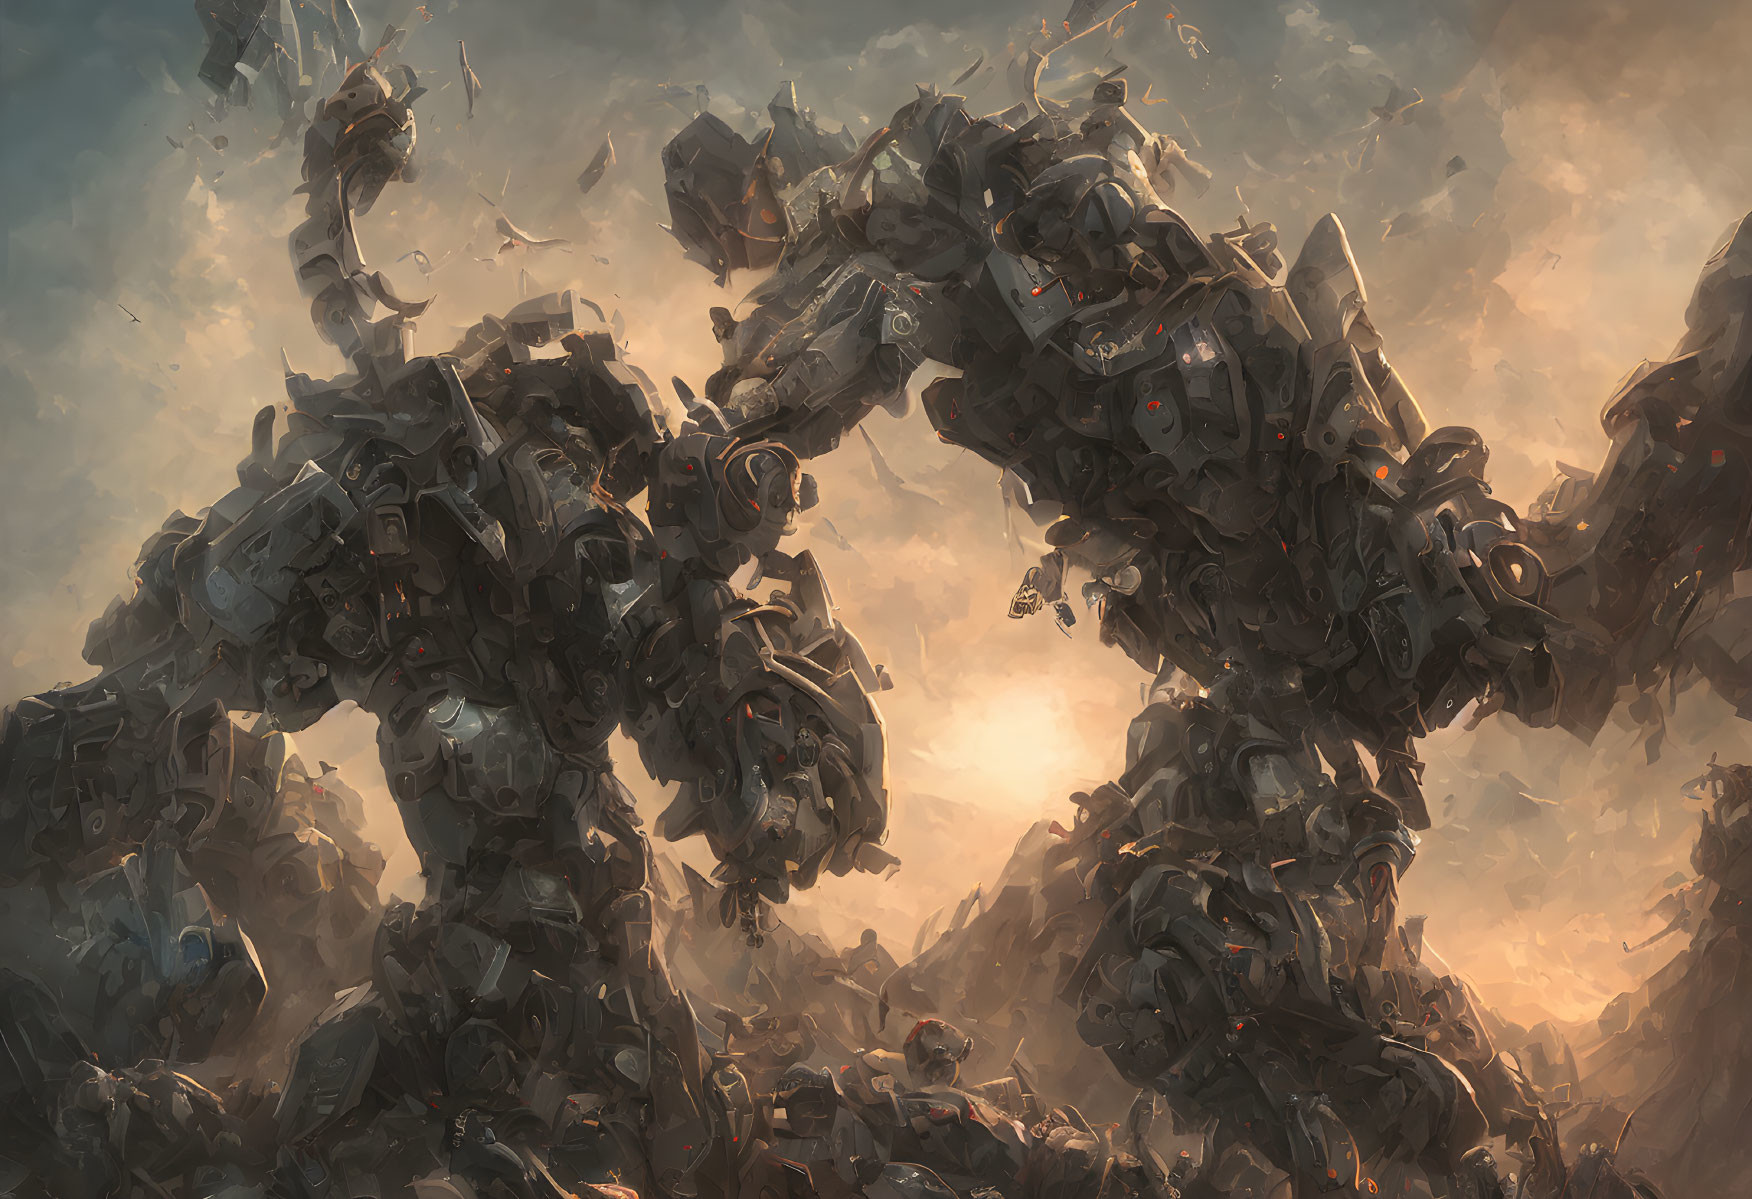 Giant robots battling in hazy, sunlit scene